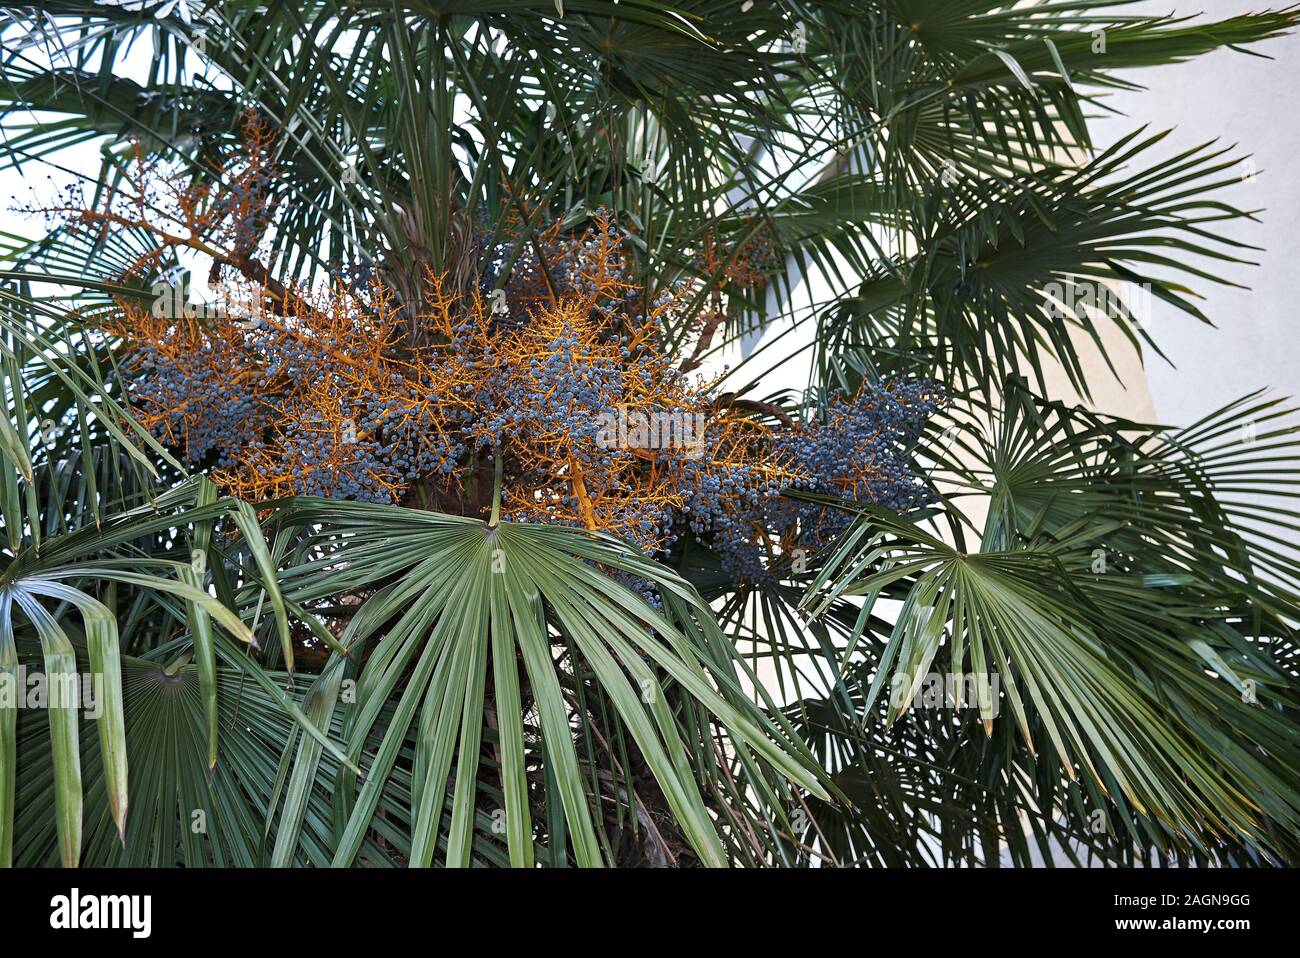 Trachycarpus fortunei palm close up with blue fruits Stock Photo